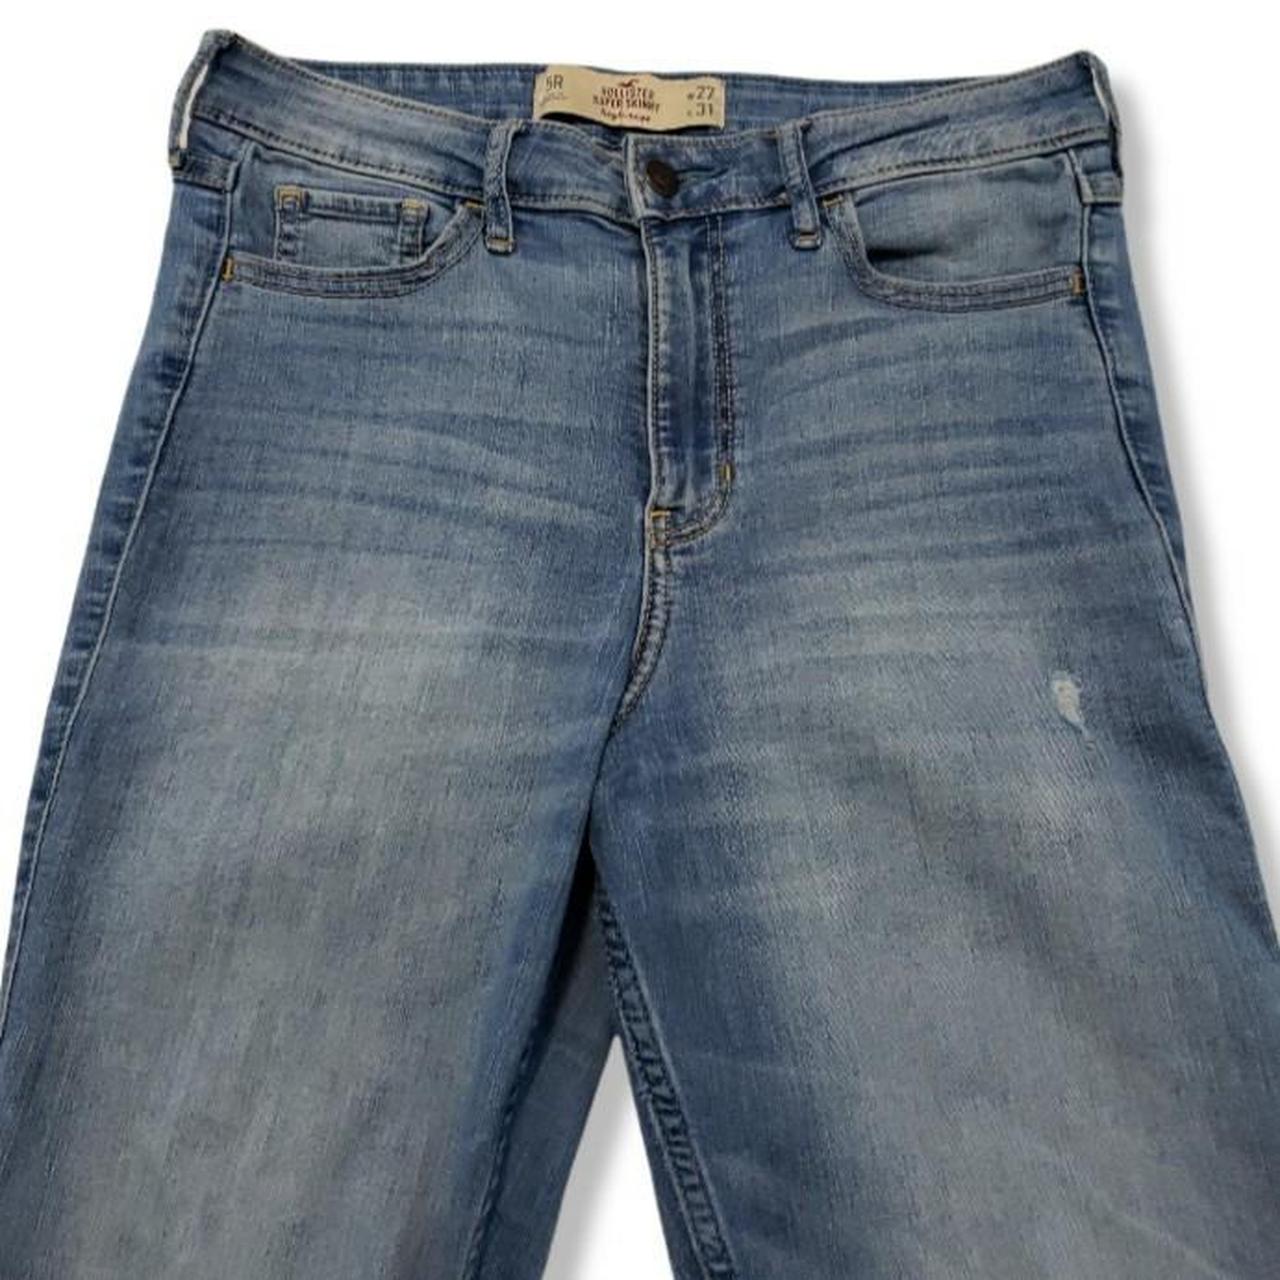 hollister leather jeans - Gem